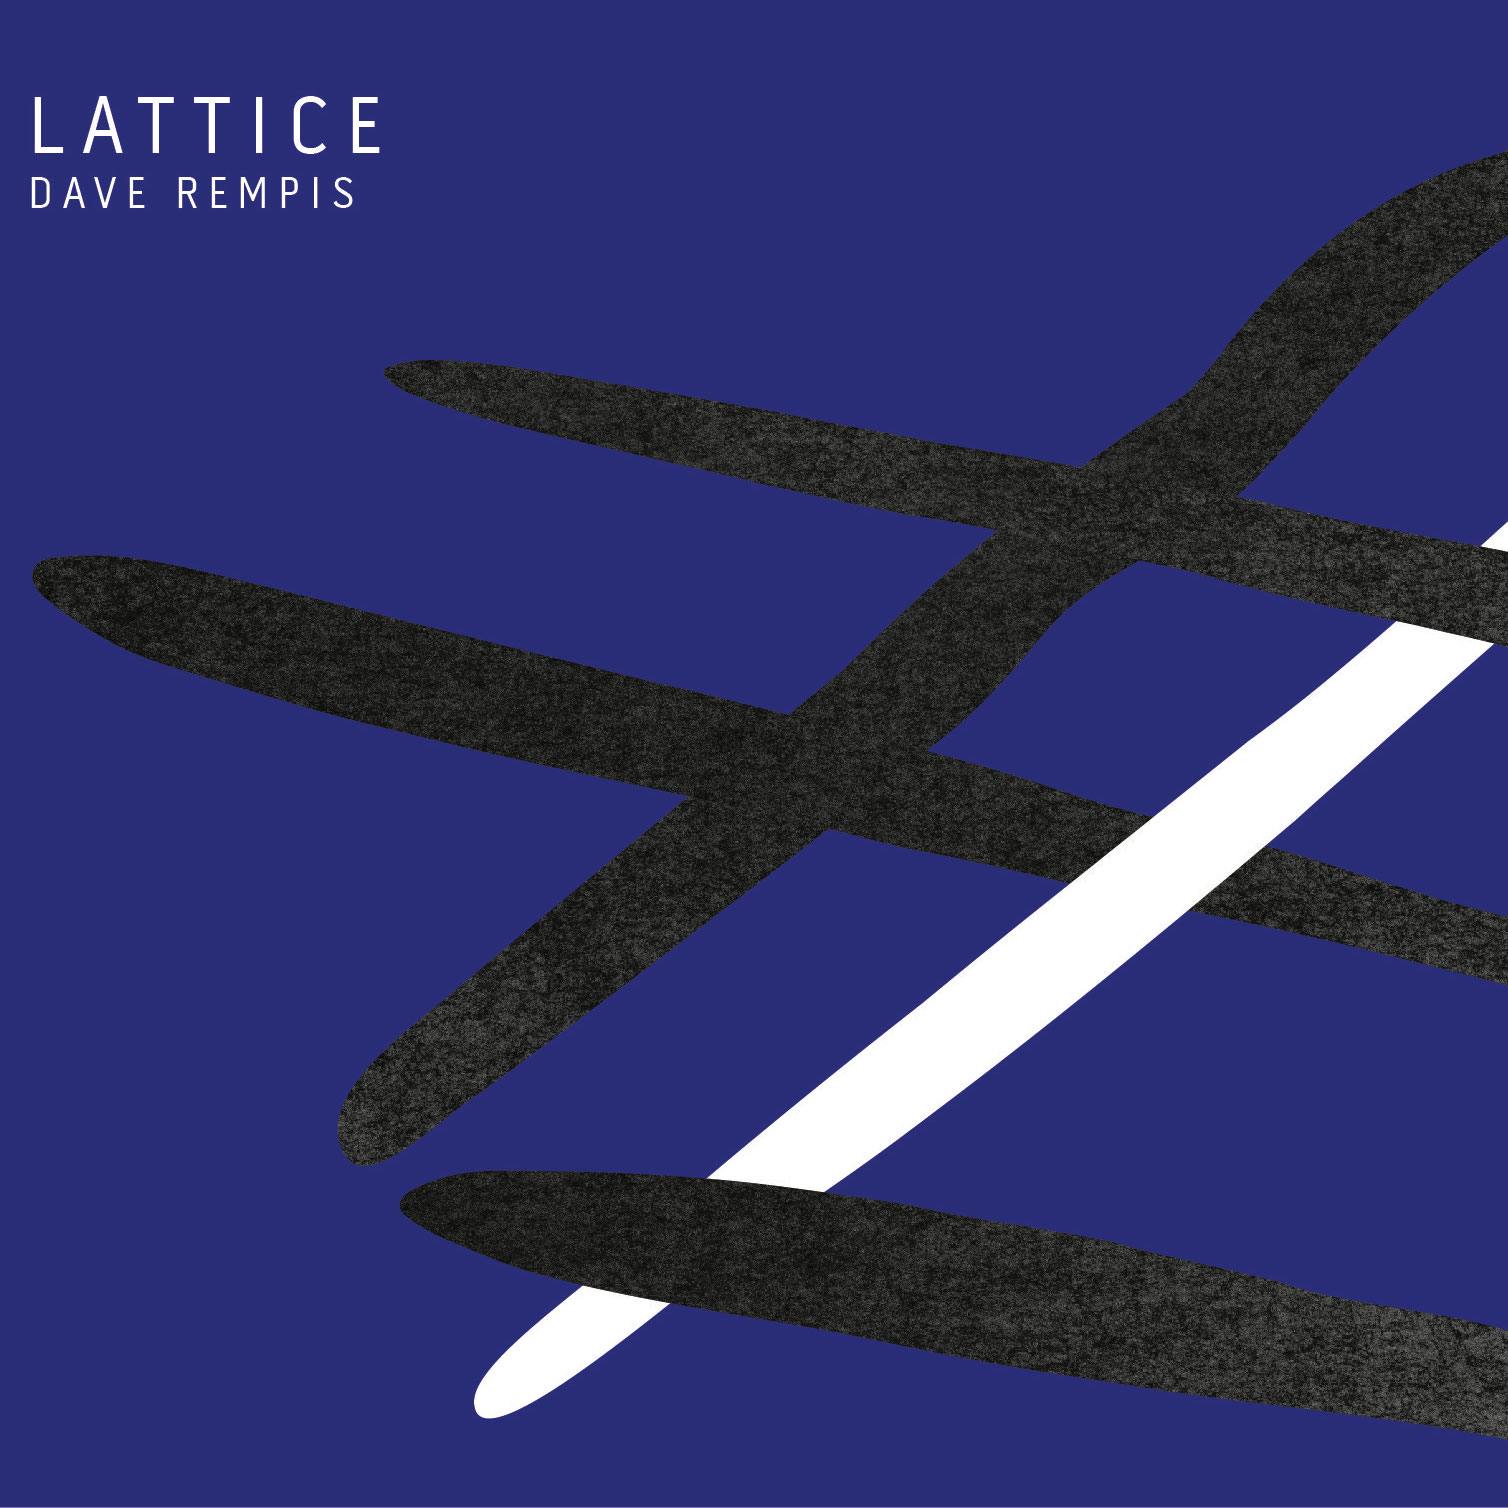 Lattice Front Cover.jpg